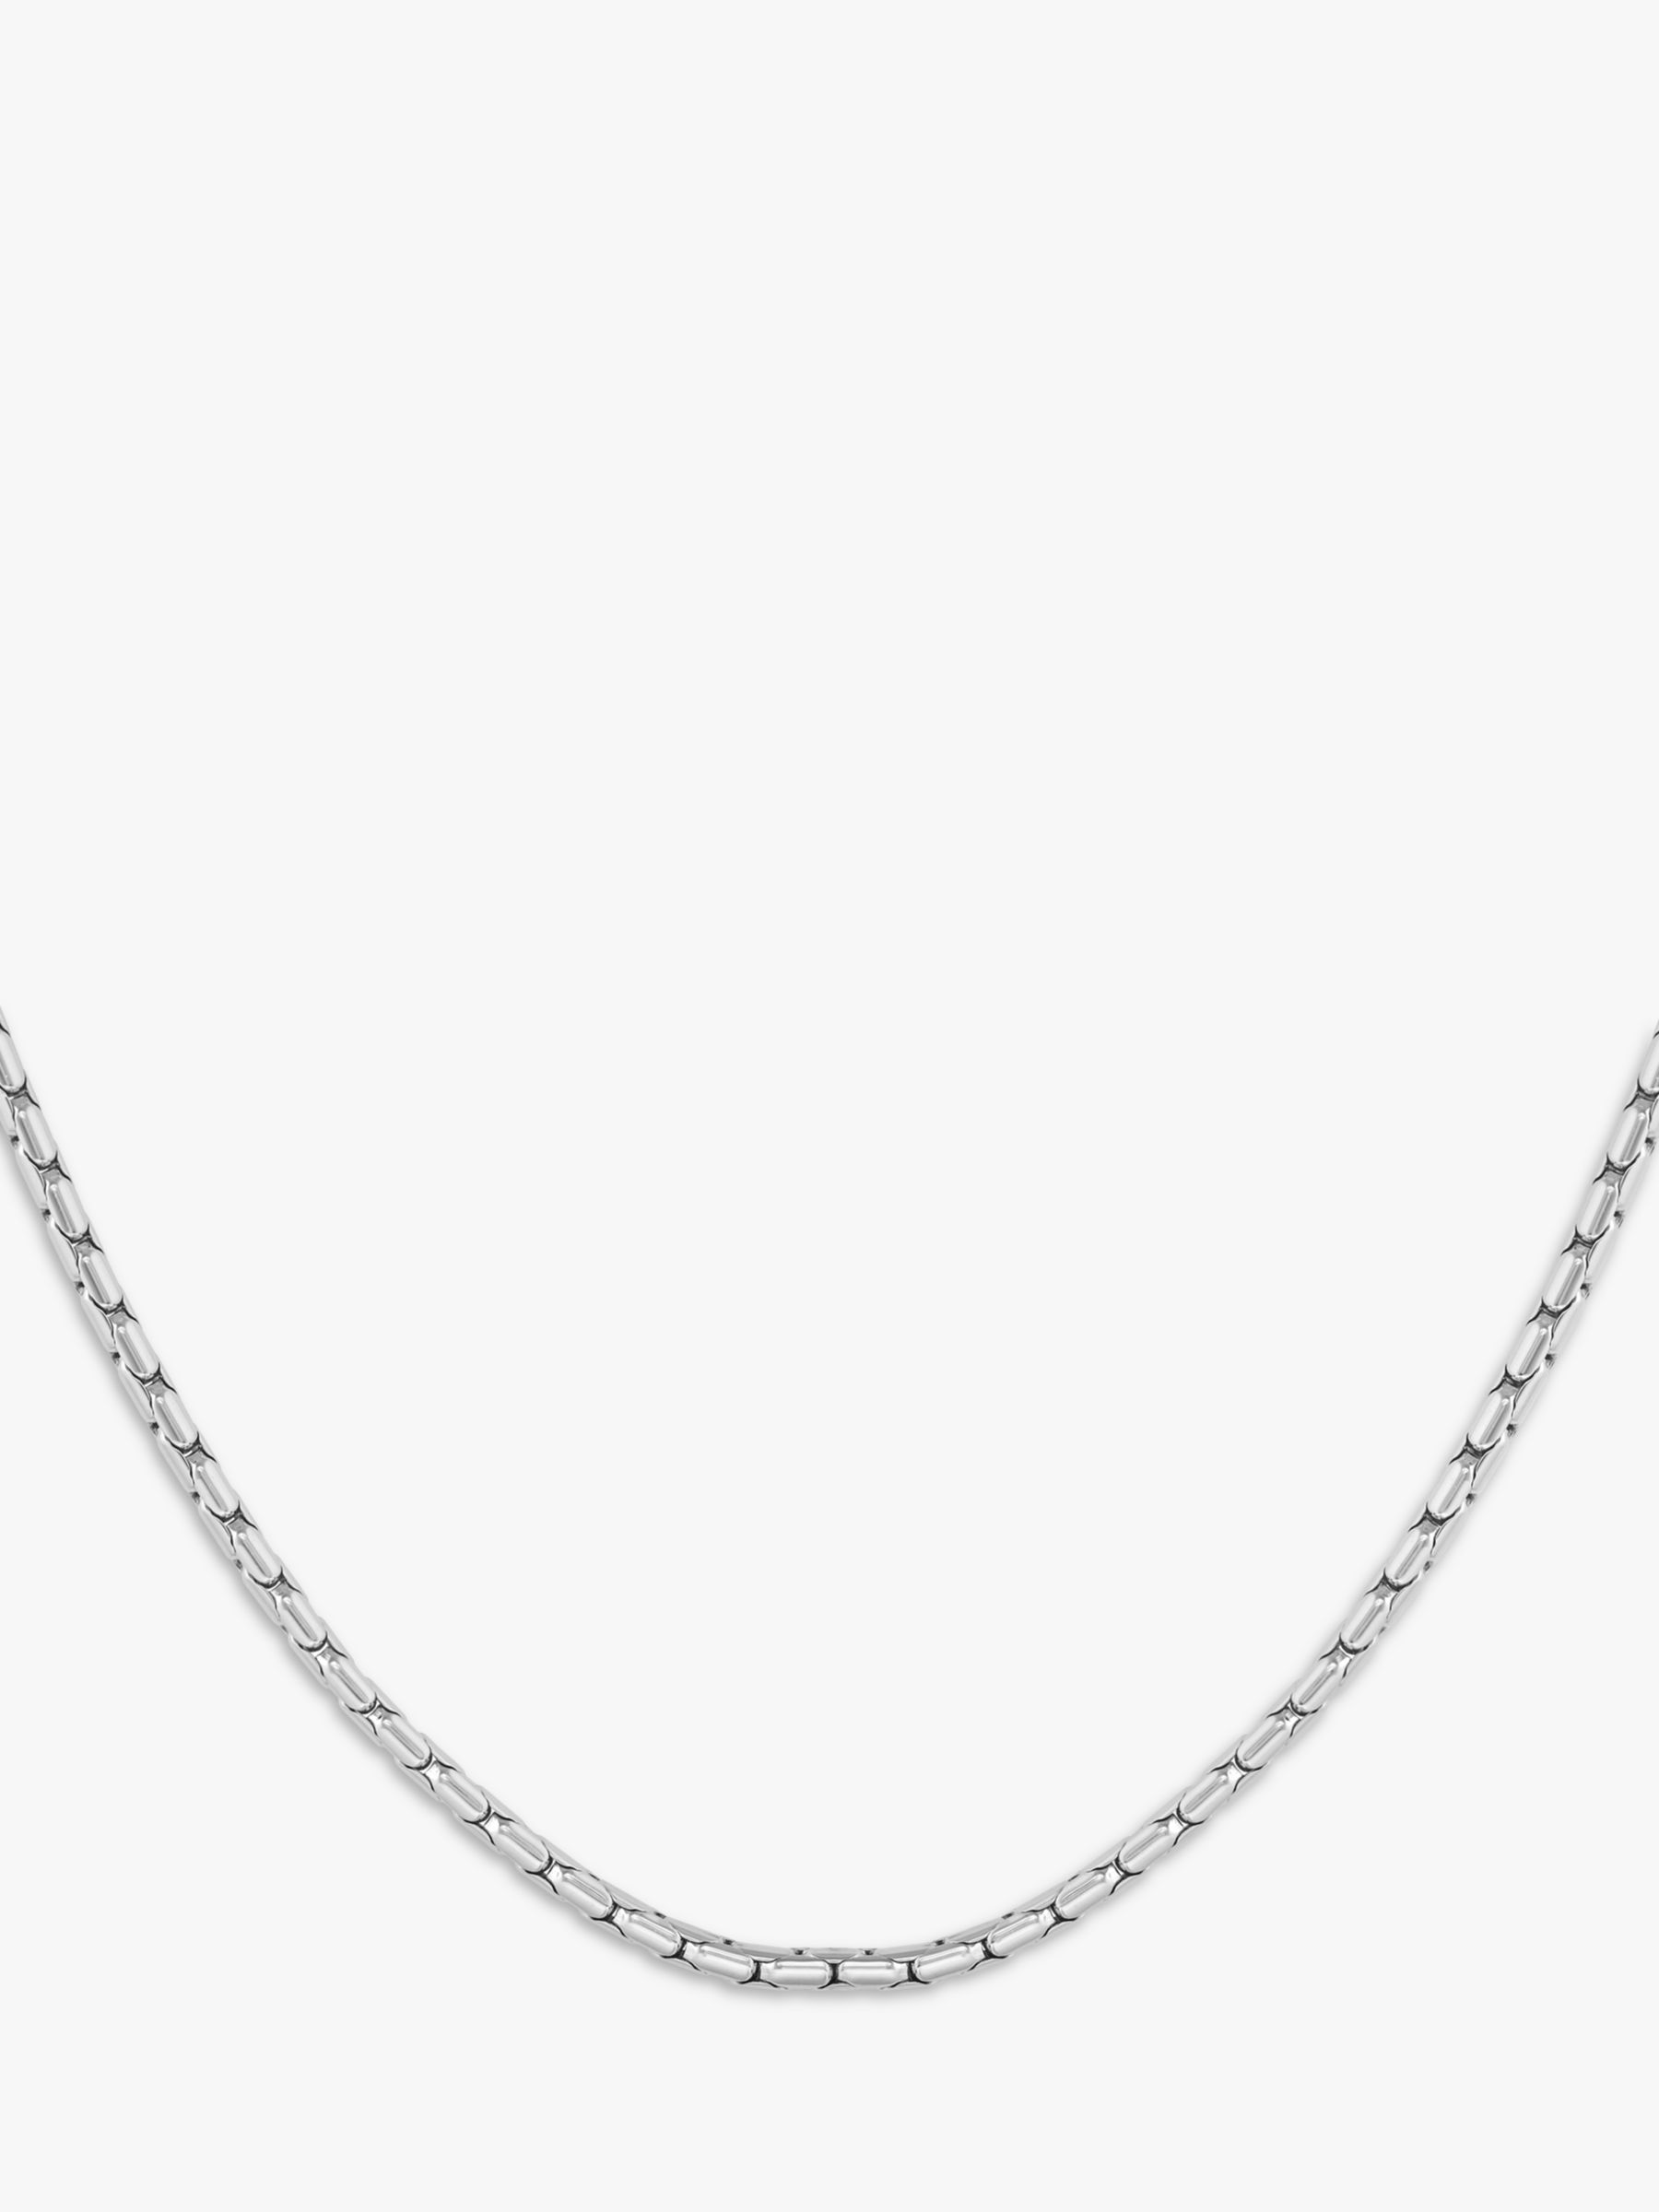 HUGO BOSS Men's Evan Chain Necklace, Silver